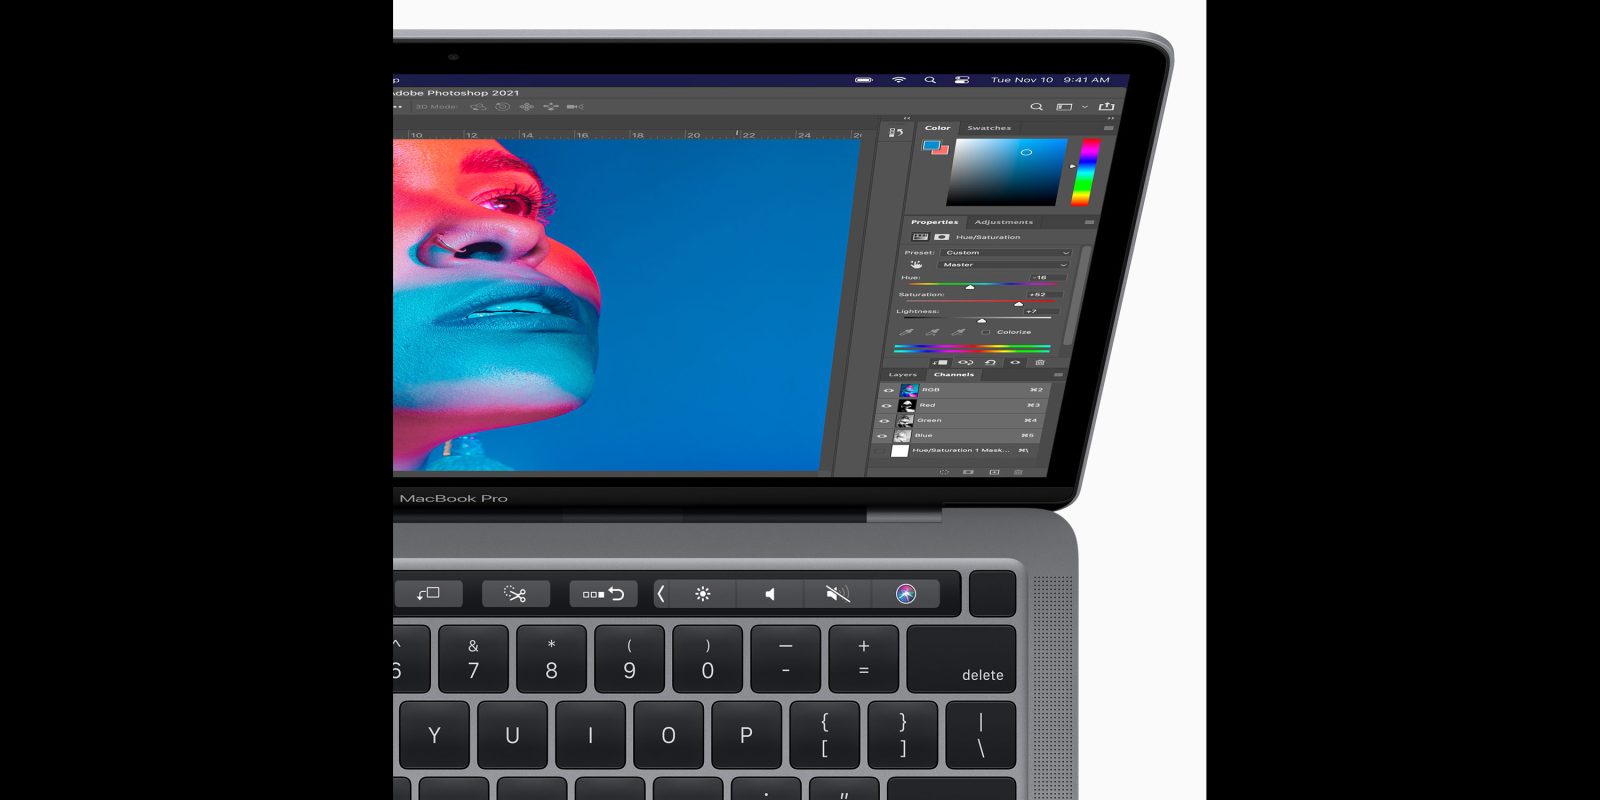 M1 MacBook Pro photo editing test